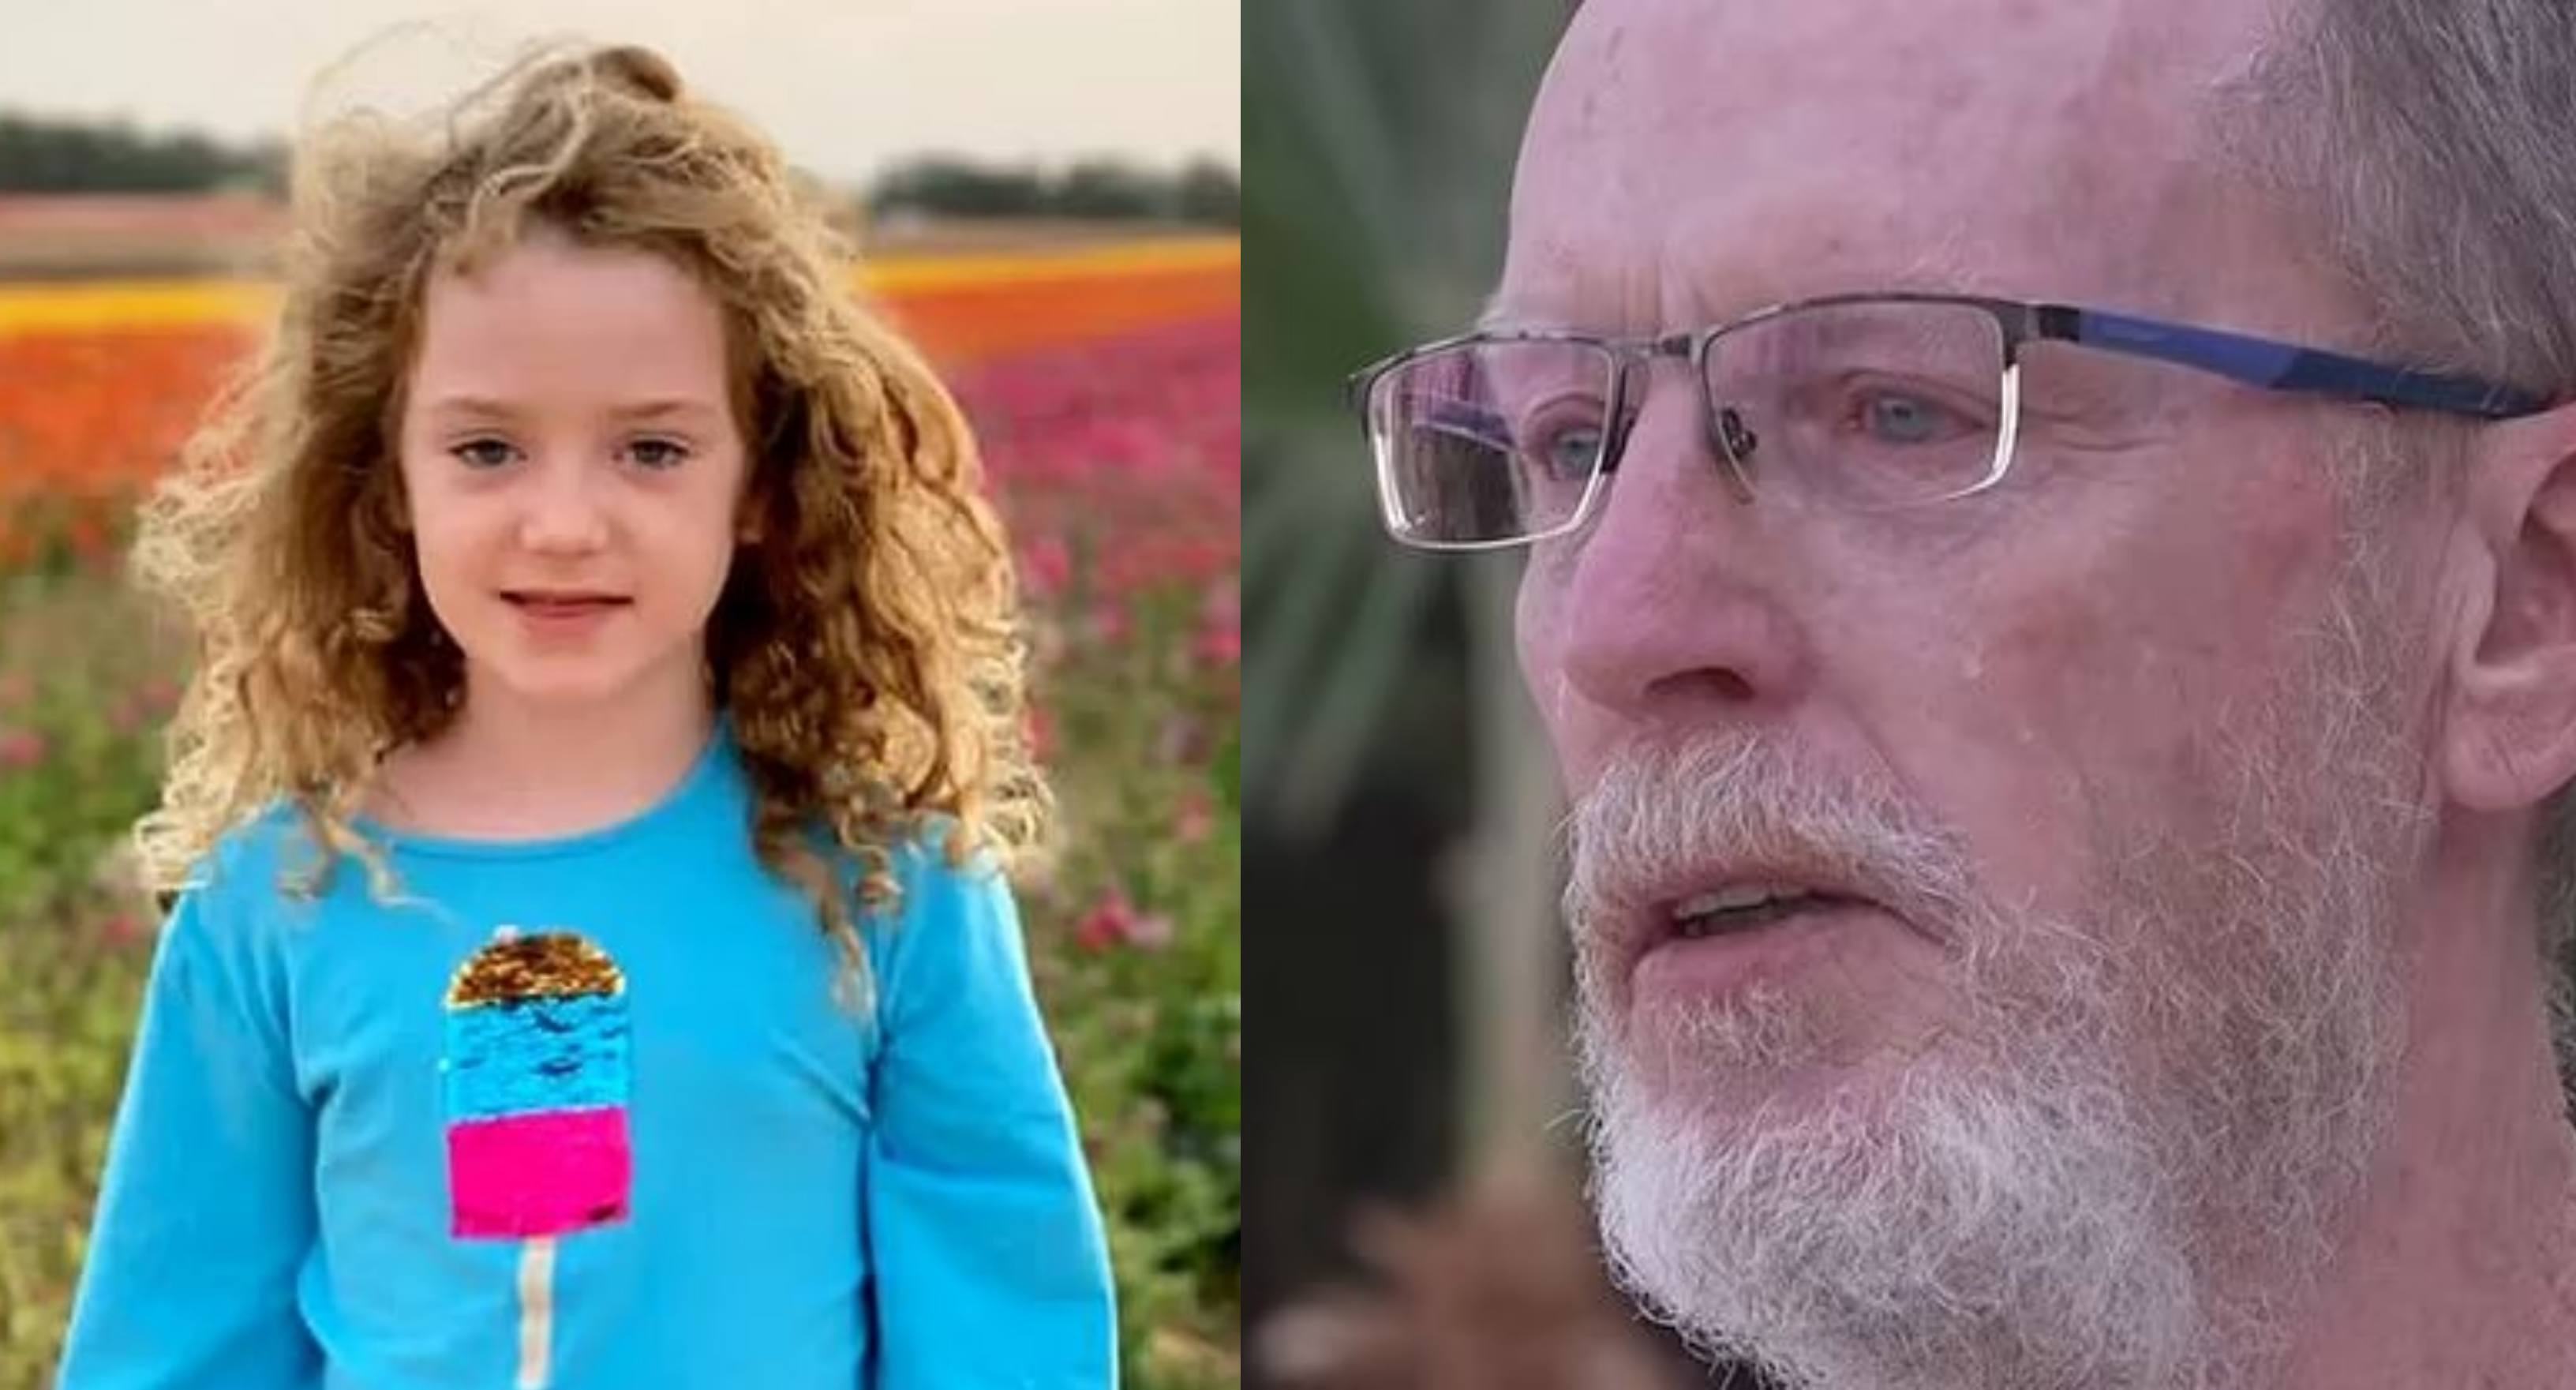 Cutremurator! Un tata din Israel s-a bucurat ca fiica lui de 8 ani a murit: „Mai bine moarta decat luata ostatica si torturata”